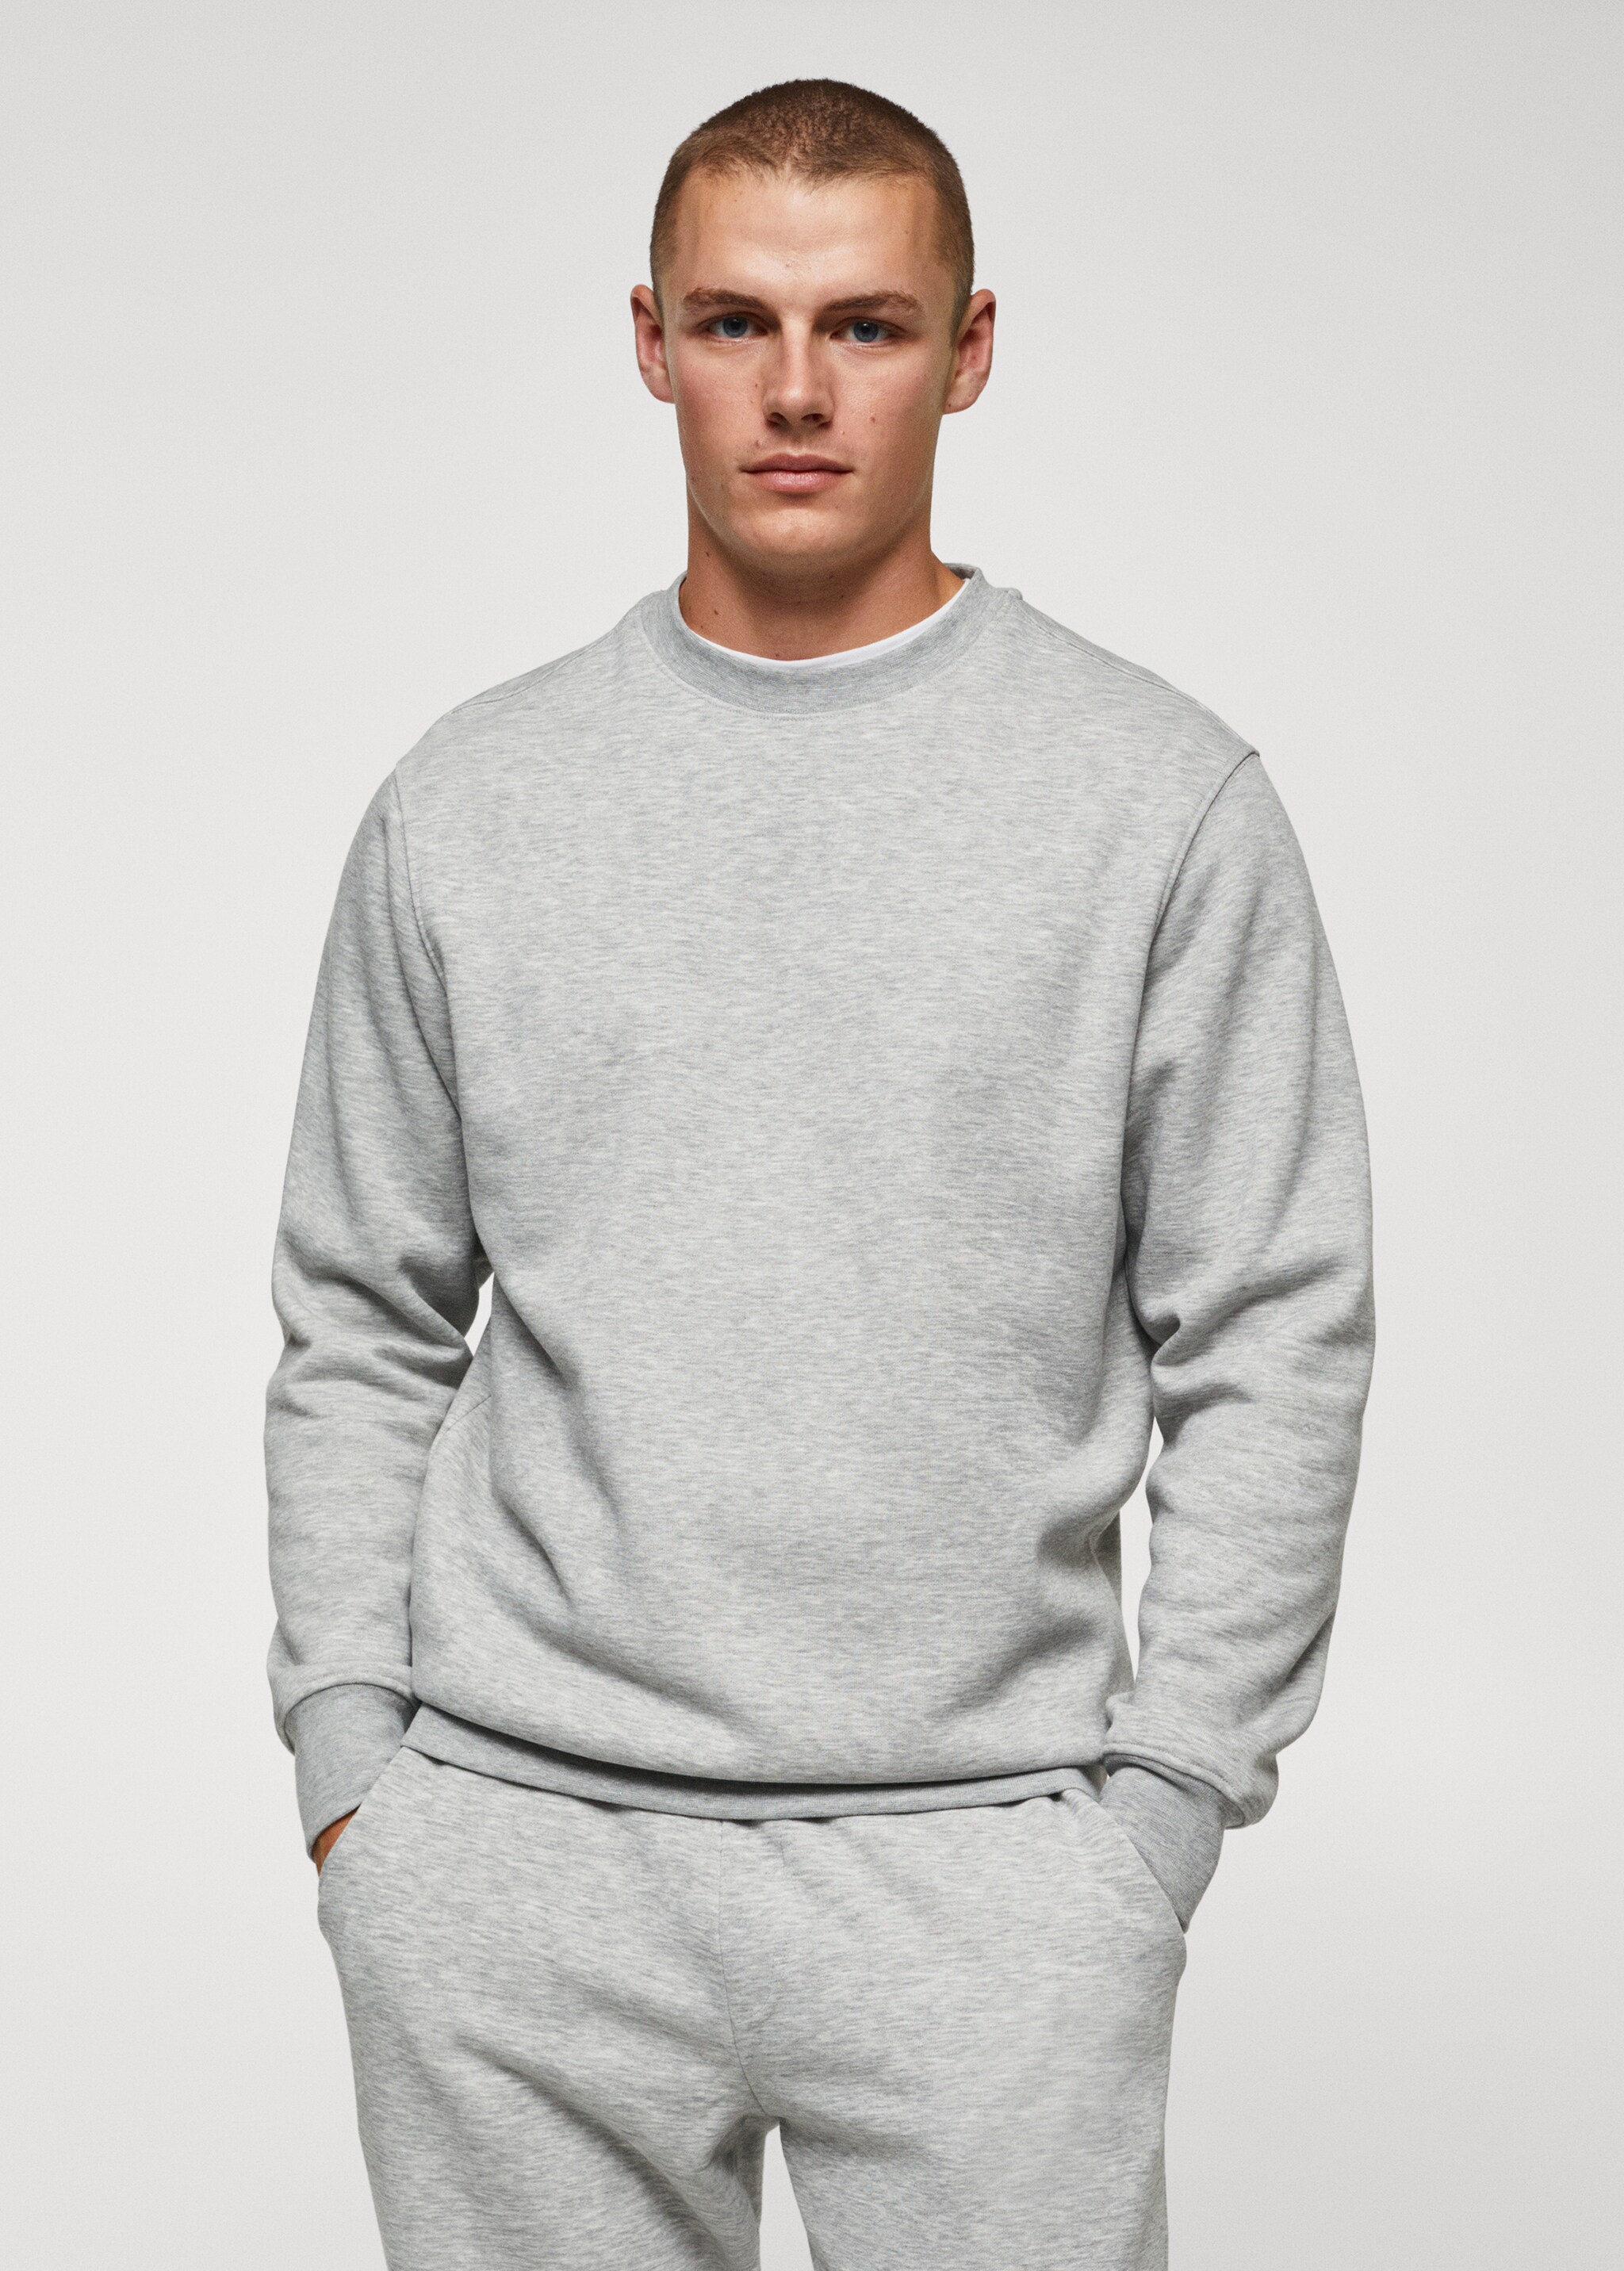 Lightweight cotton sweatshirt - Plan mediu